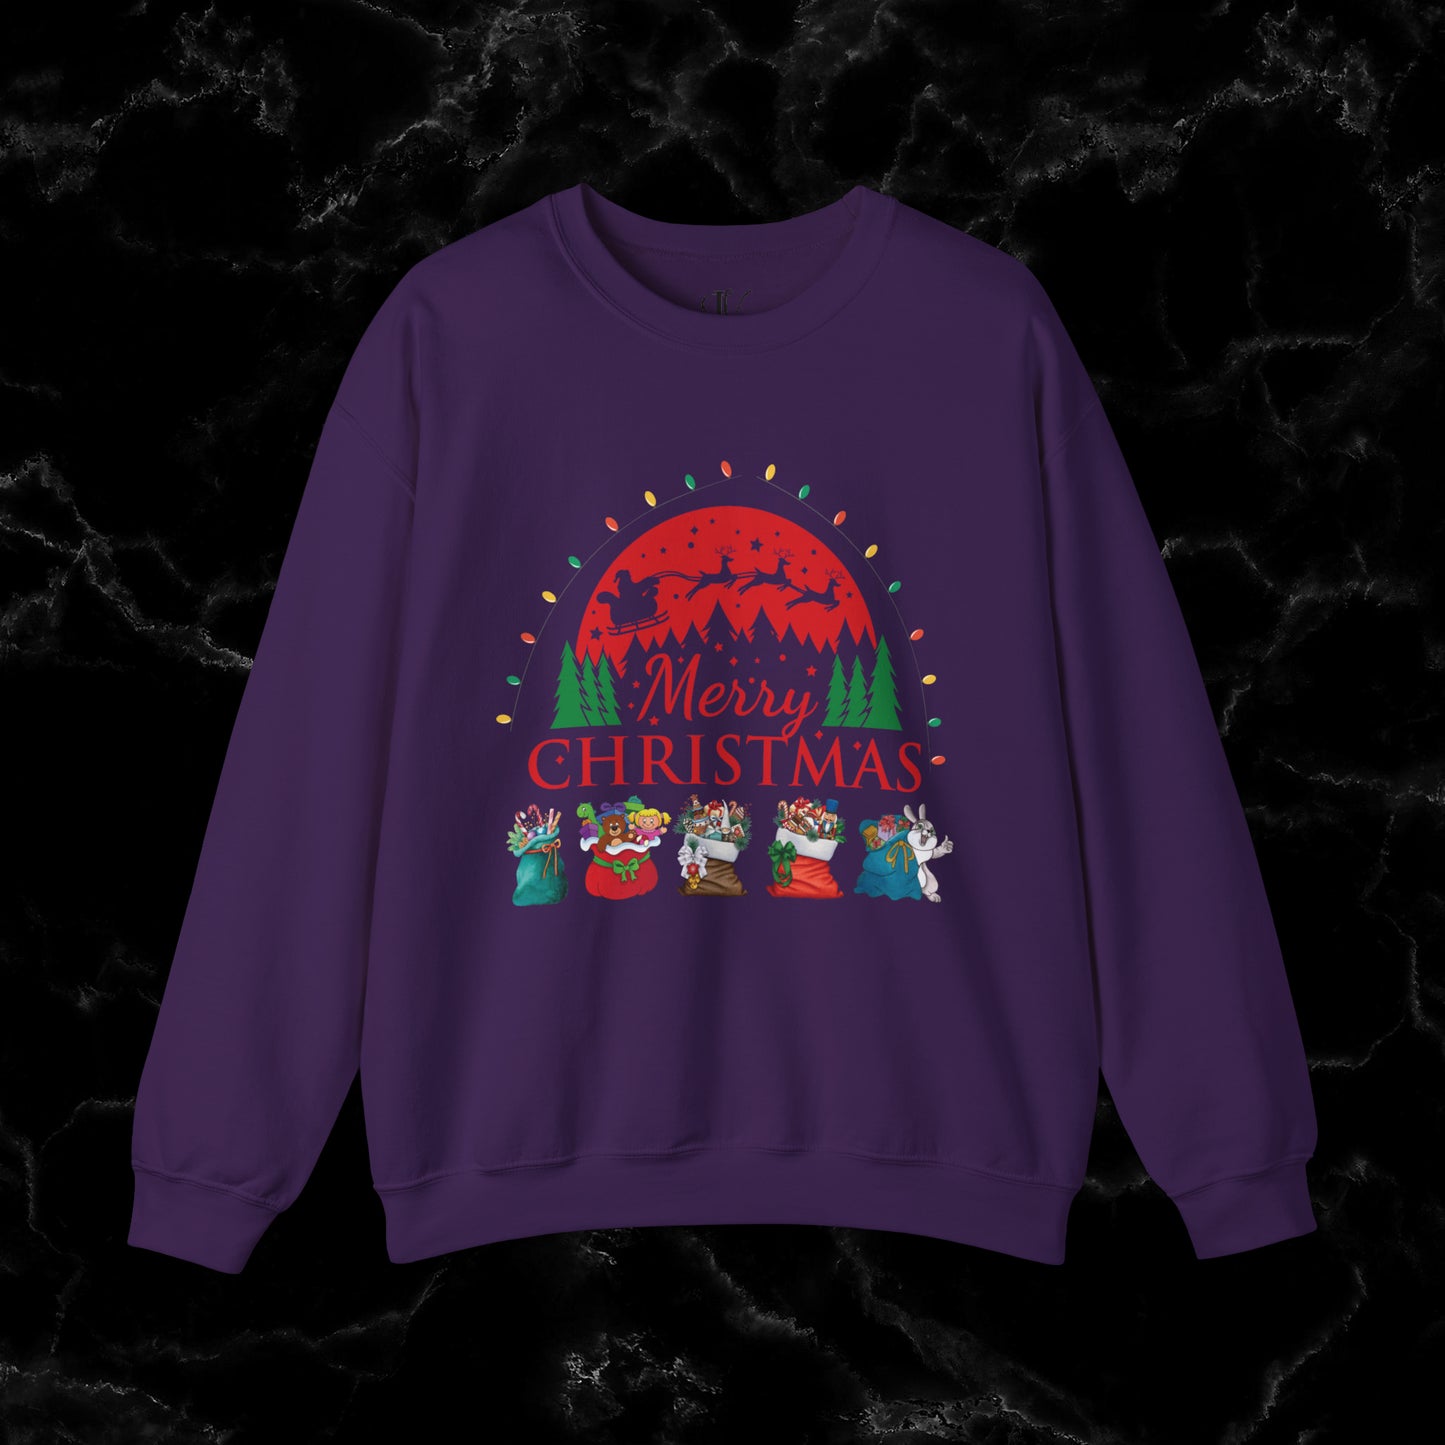 Merry Christmas Sweatshirt - Christmas Shirt with Santa and Festive Theme Sweatshirt S Purple 